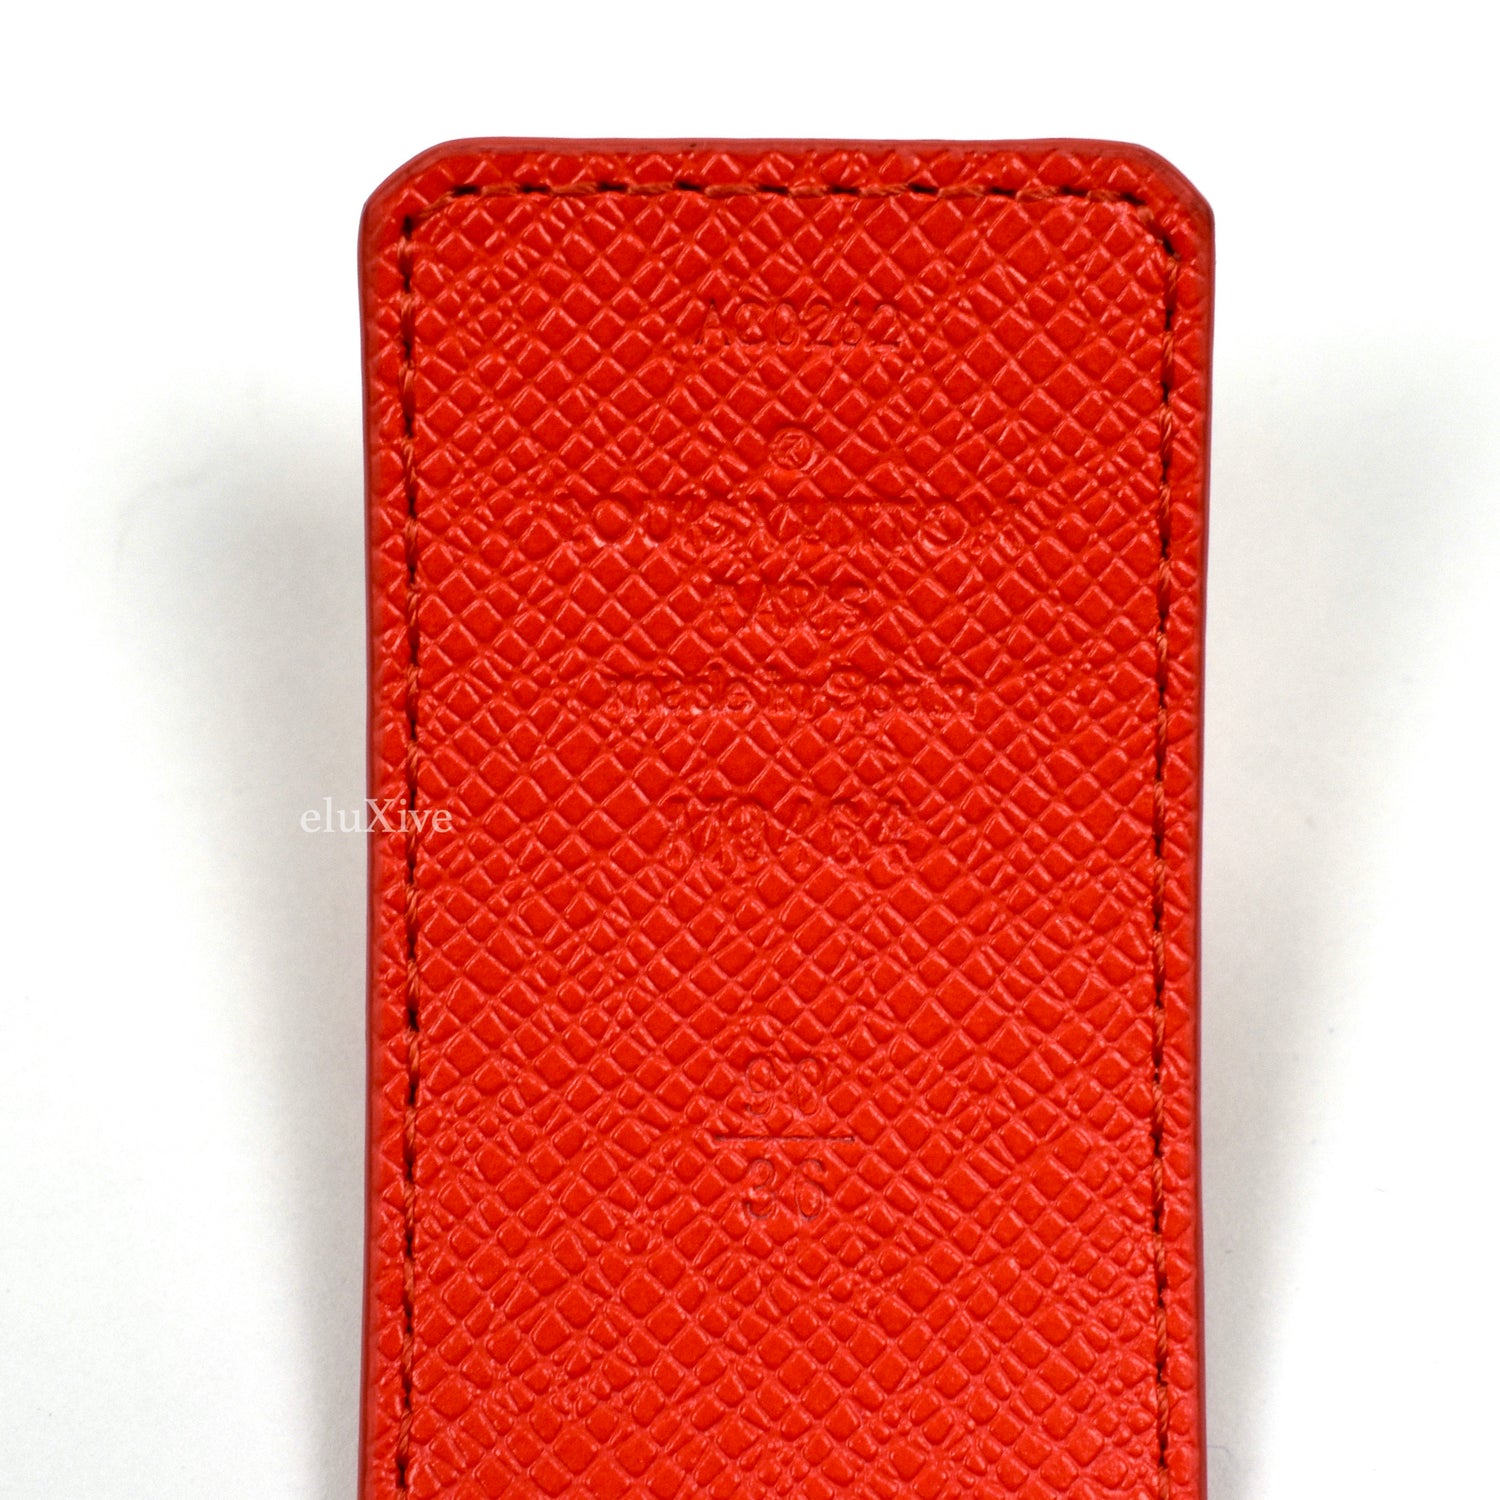 NWT Louis Vuitton Red Monogram LV Initiales Logo Buckle Belt DS